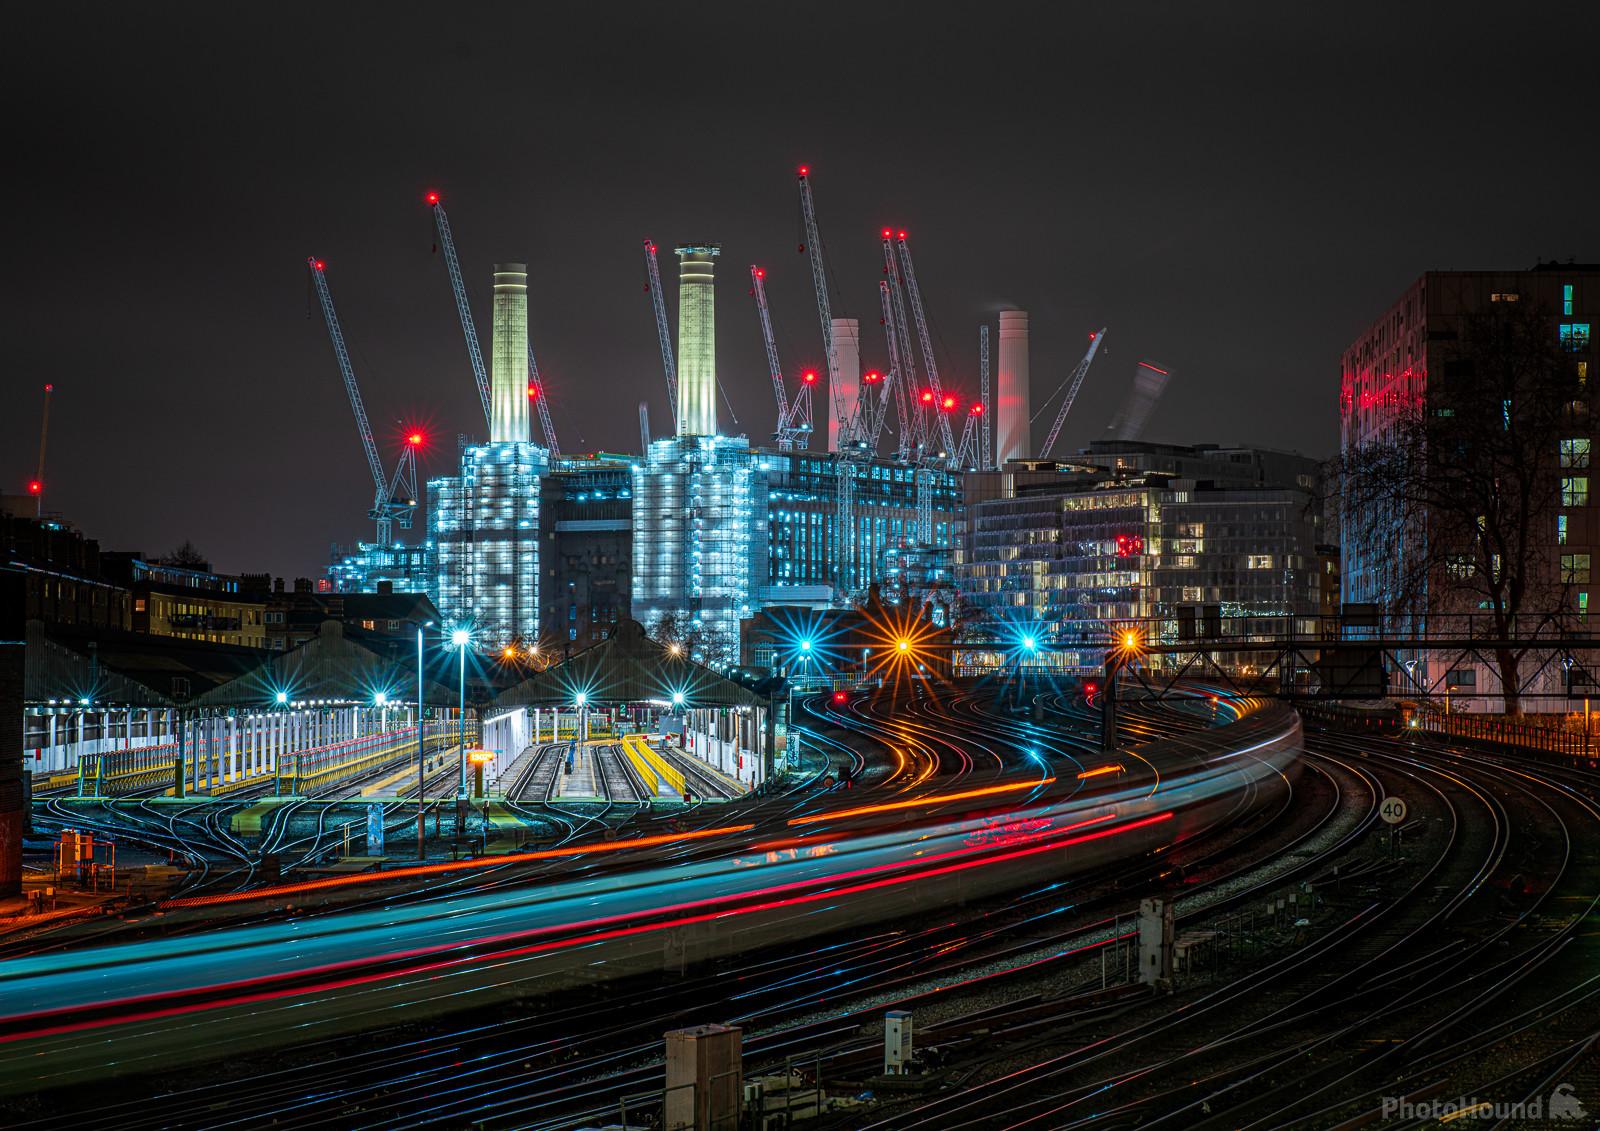 Image of Battersea Power Station from Ebury Bridge by James Billings.